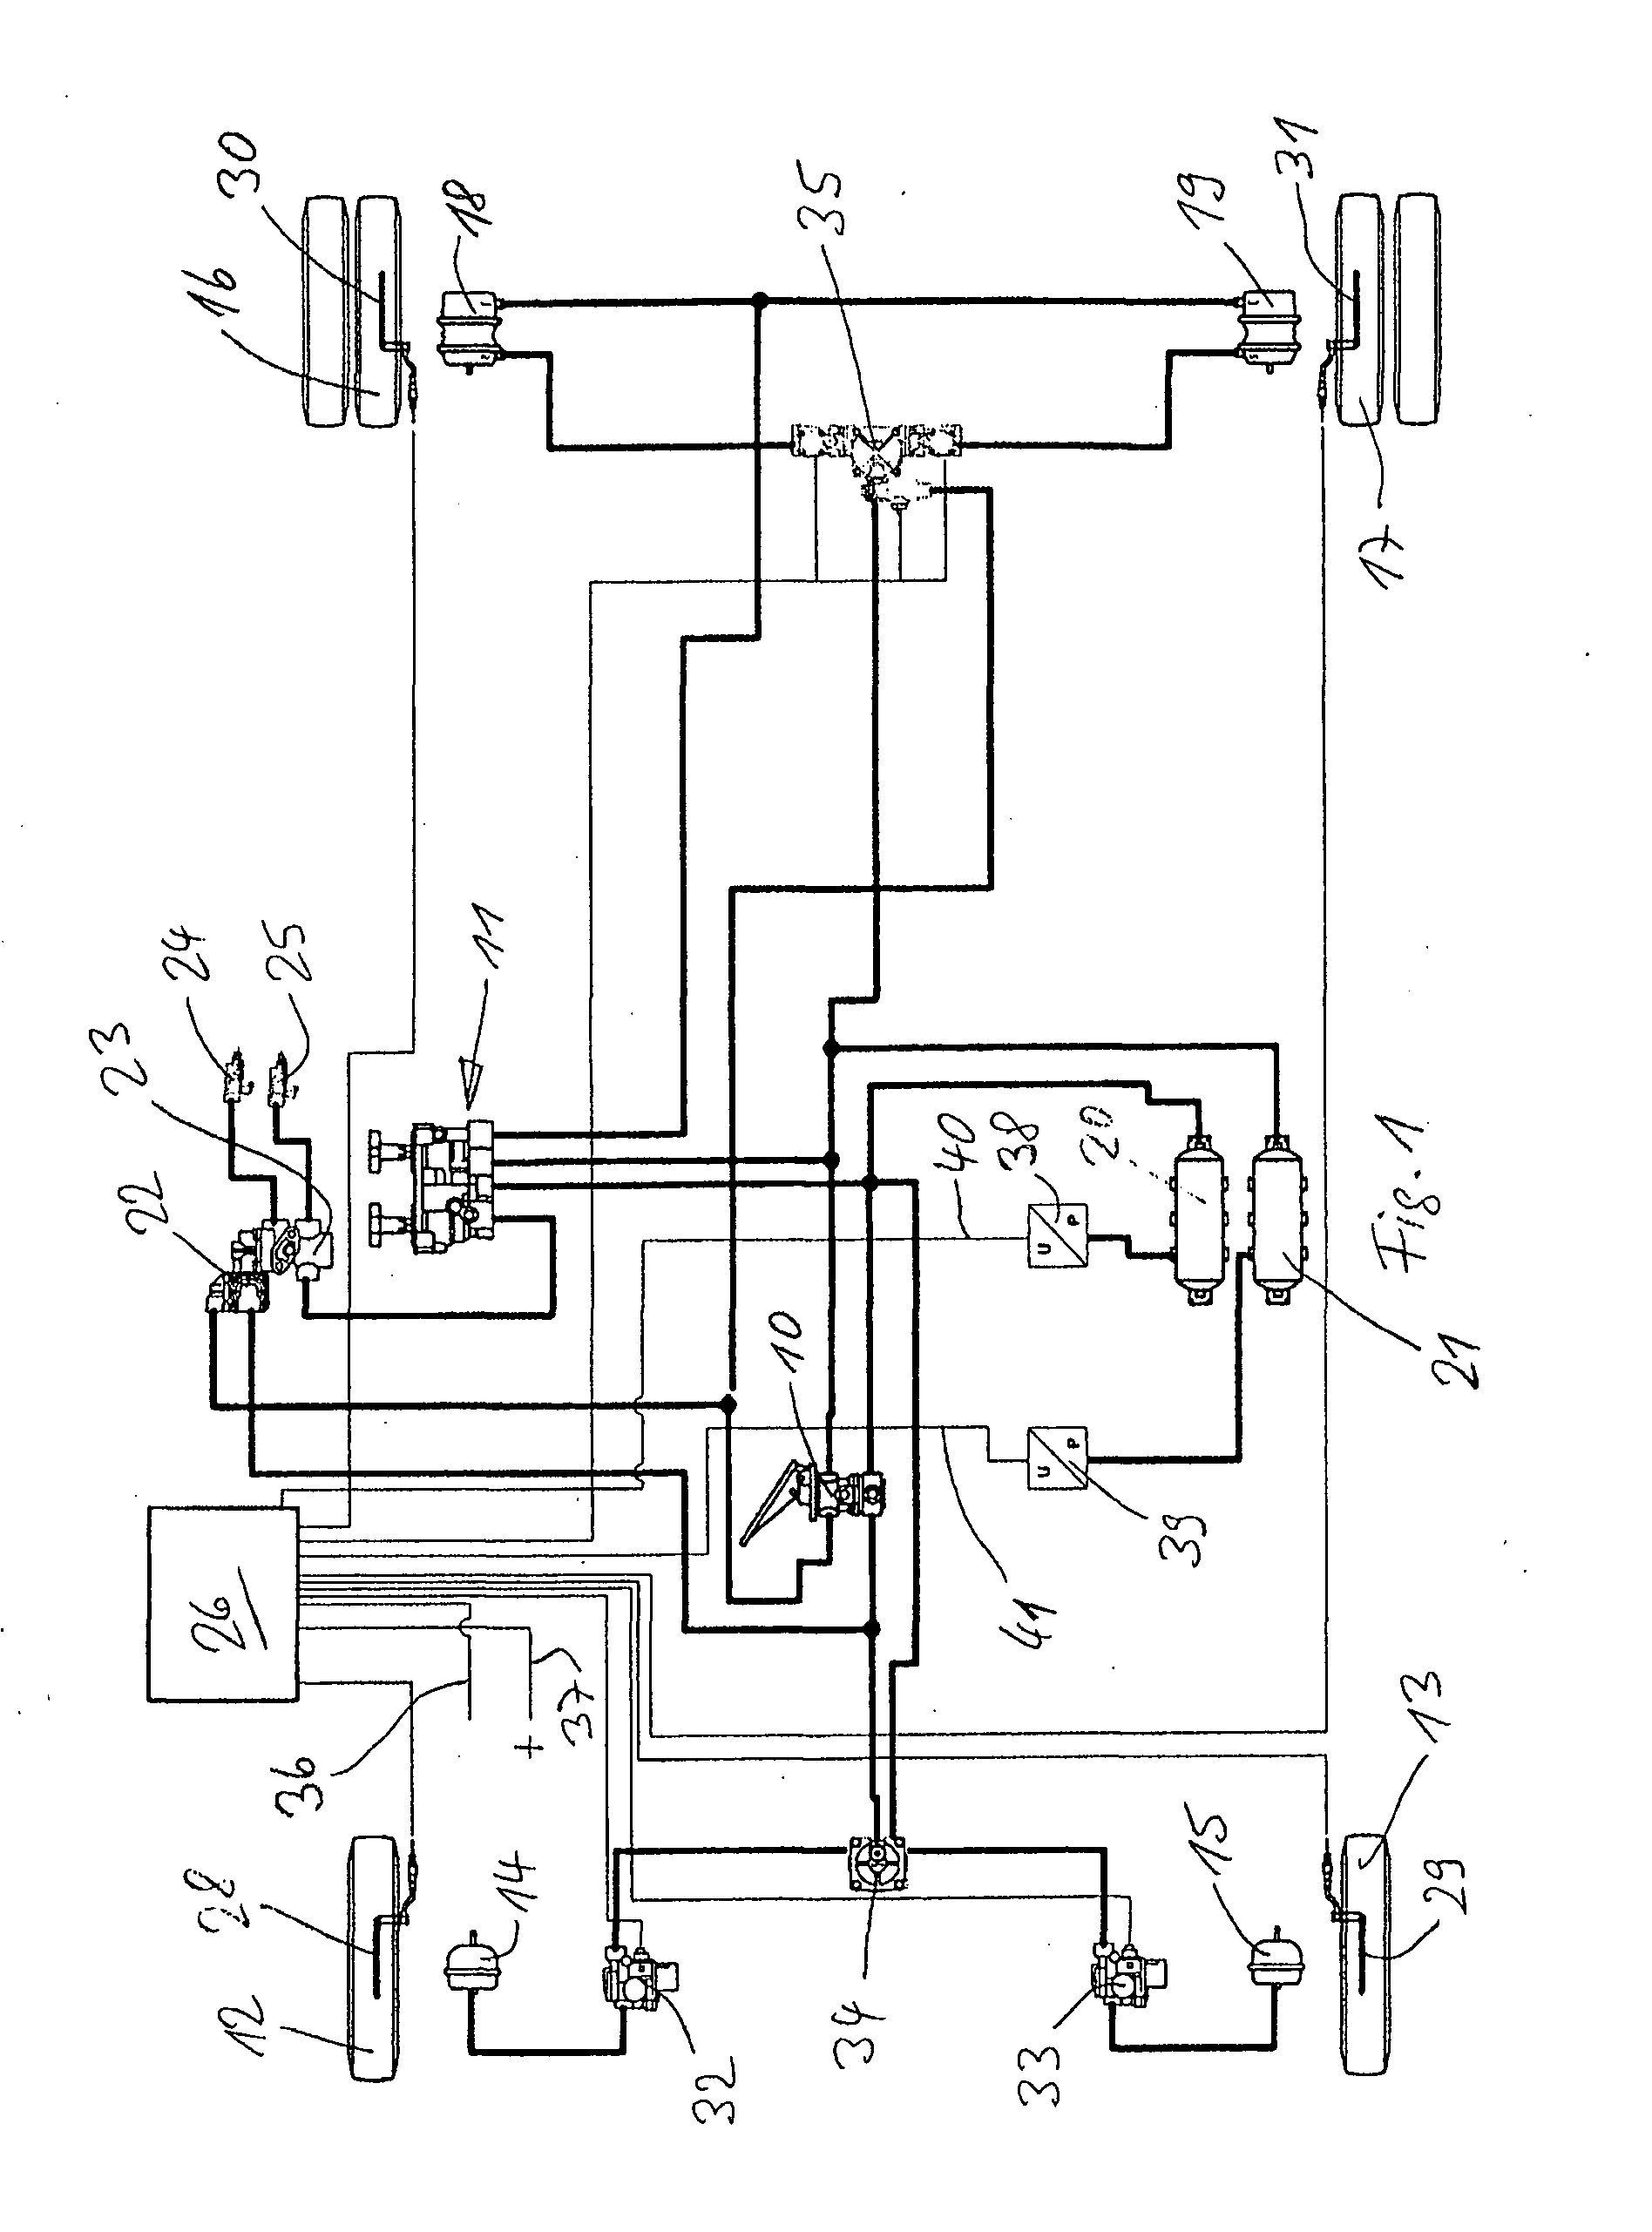 haldex modular wiring diagram